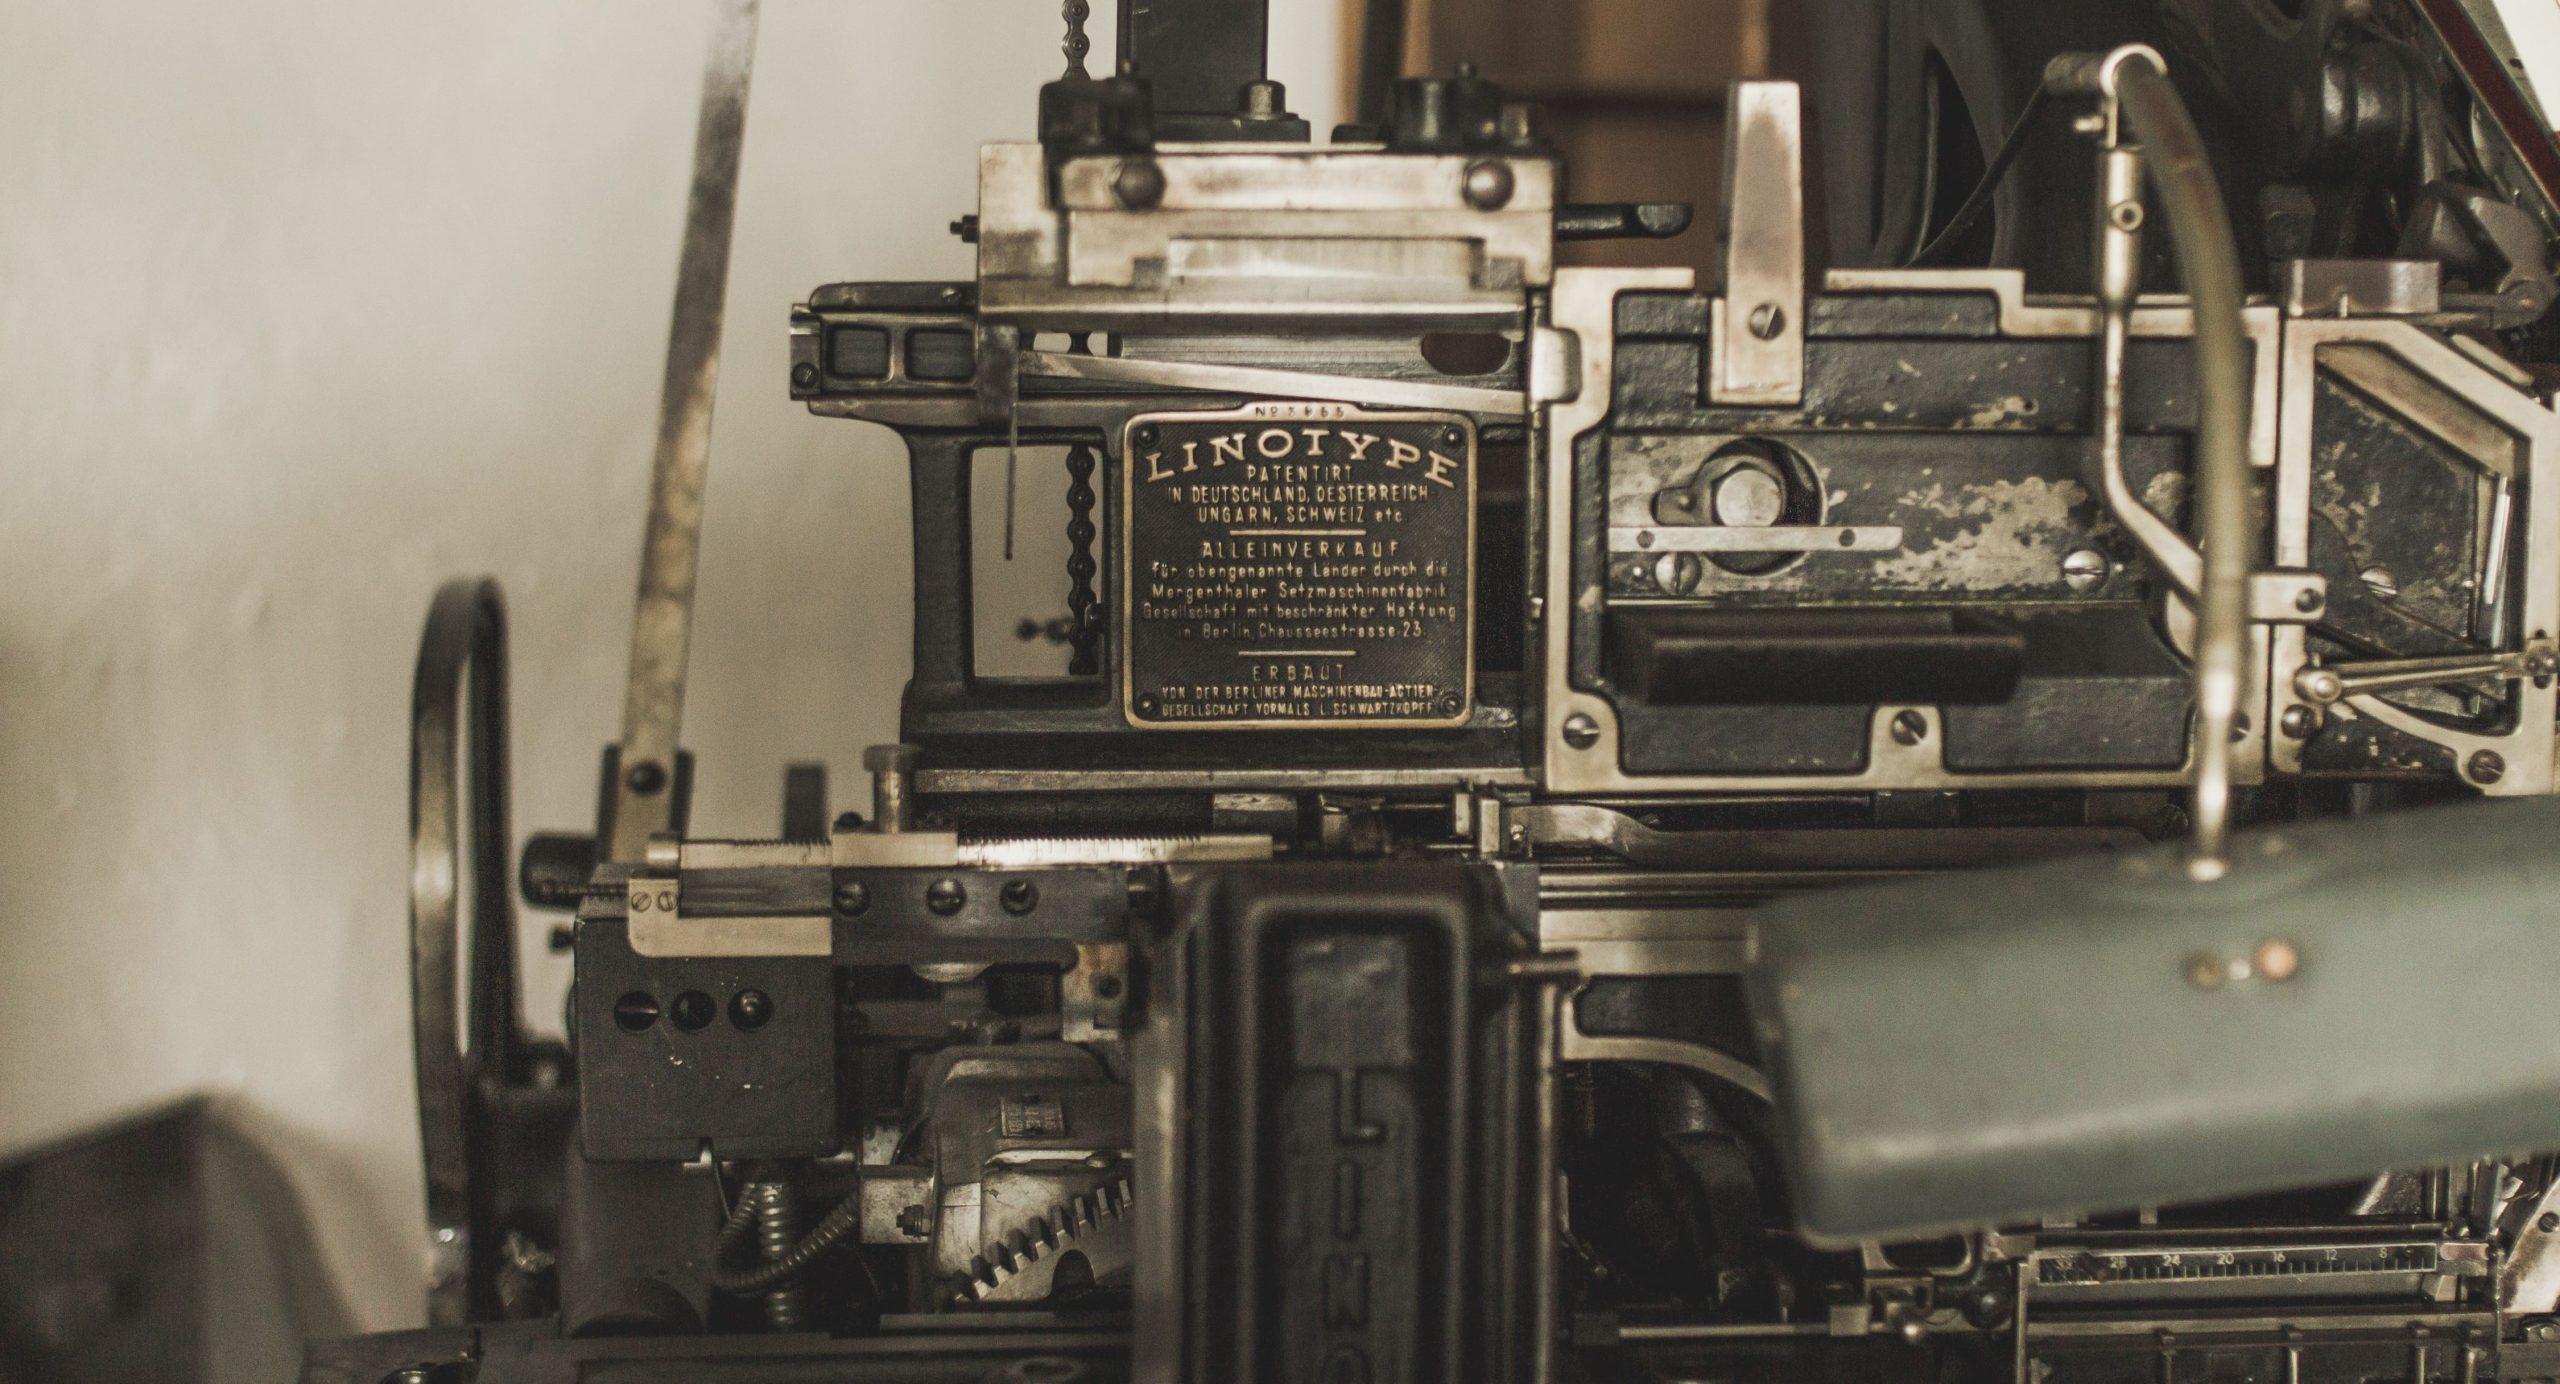 Close up of an old printing press.